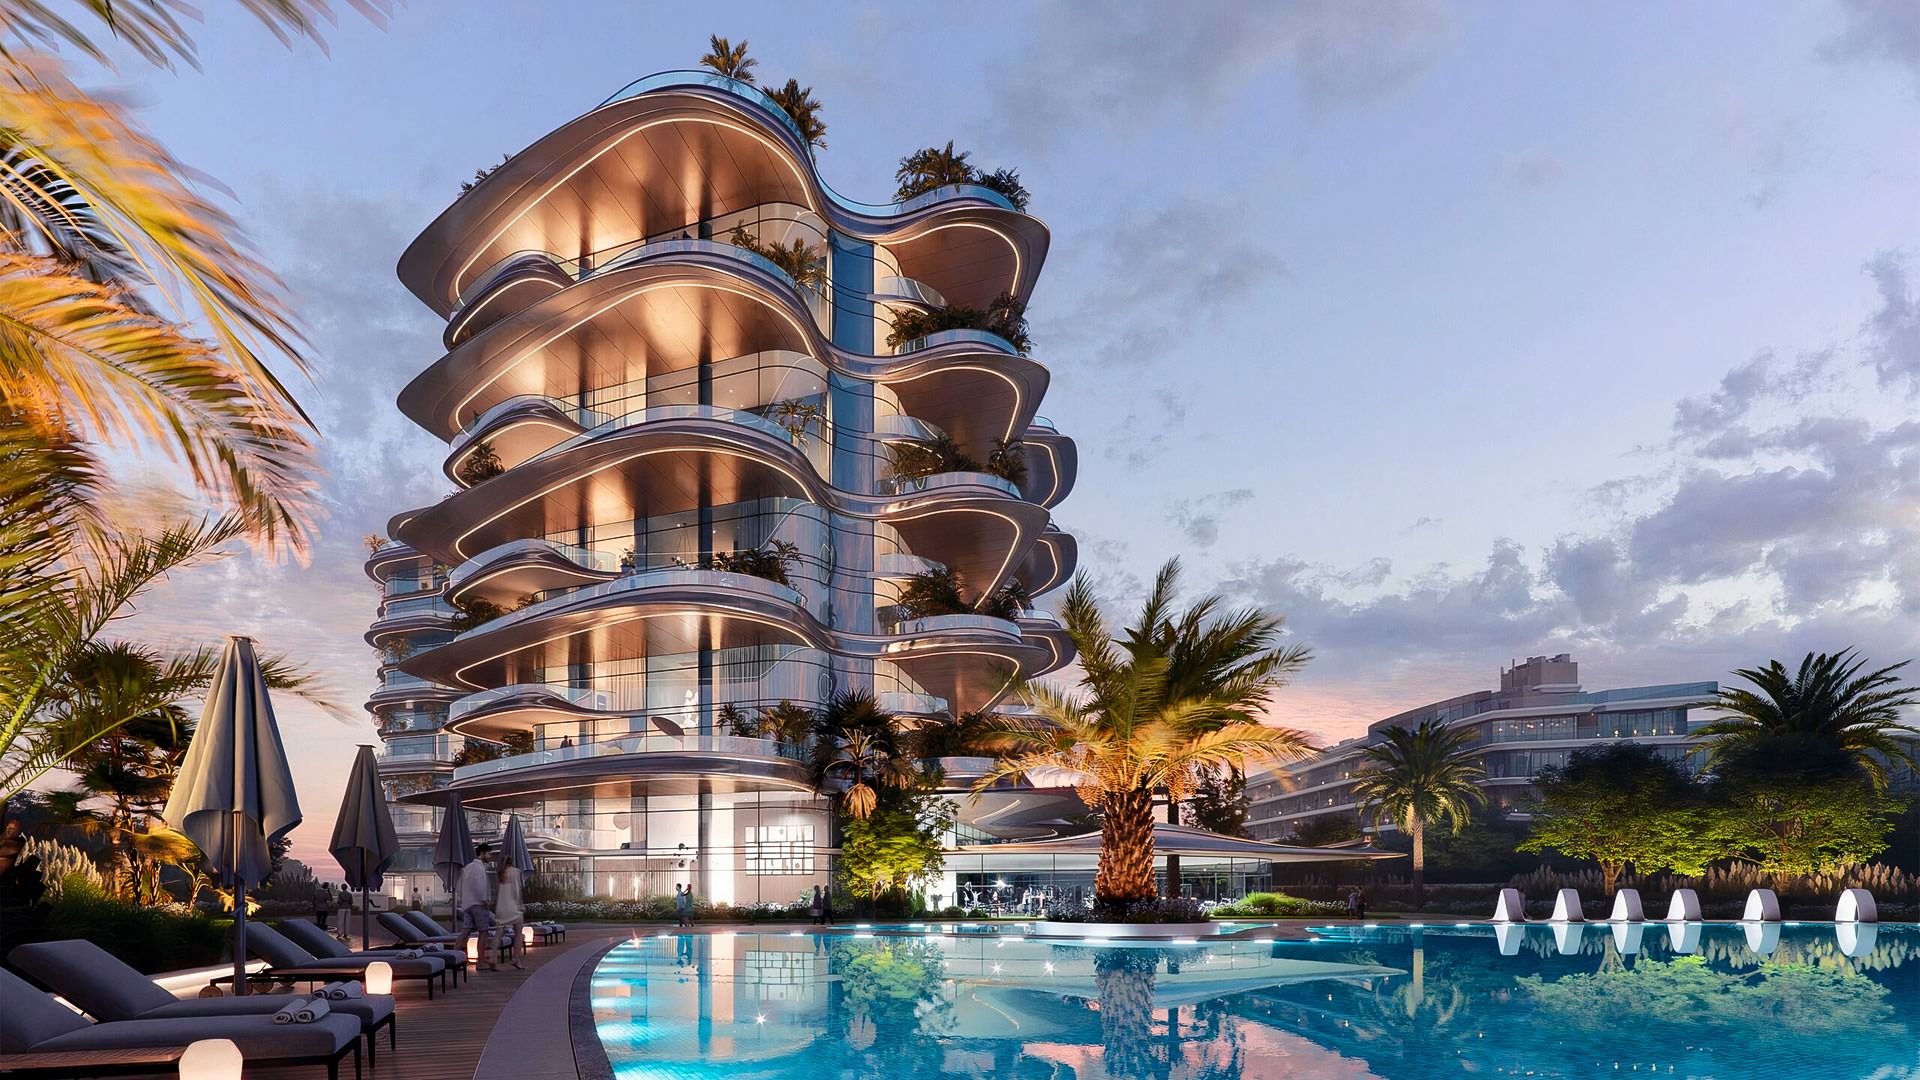 SLS Residences The Palm: A Luxurious Waterfront Development in Dubai